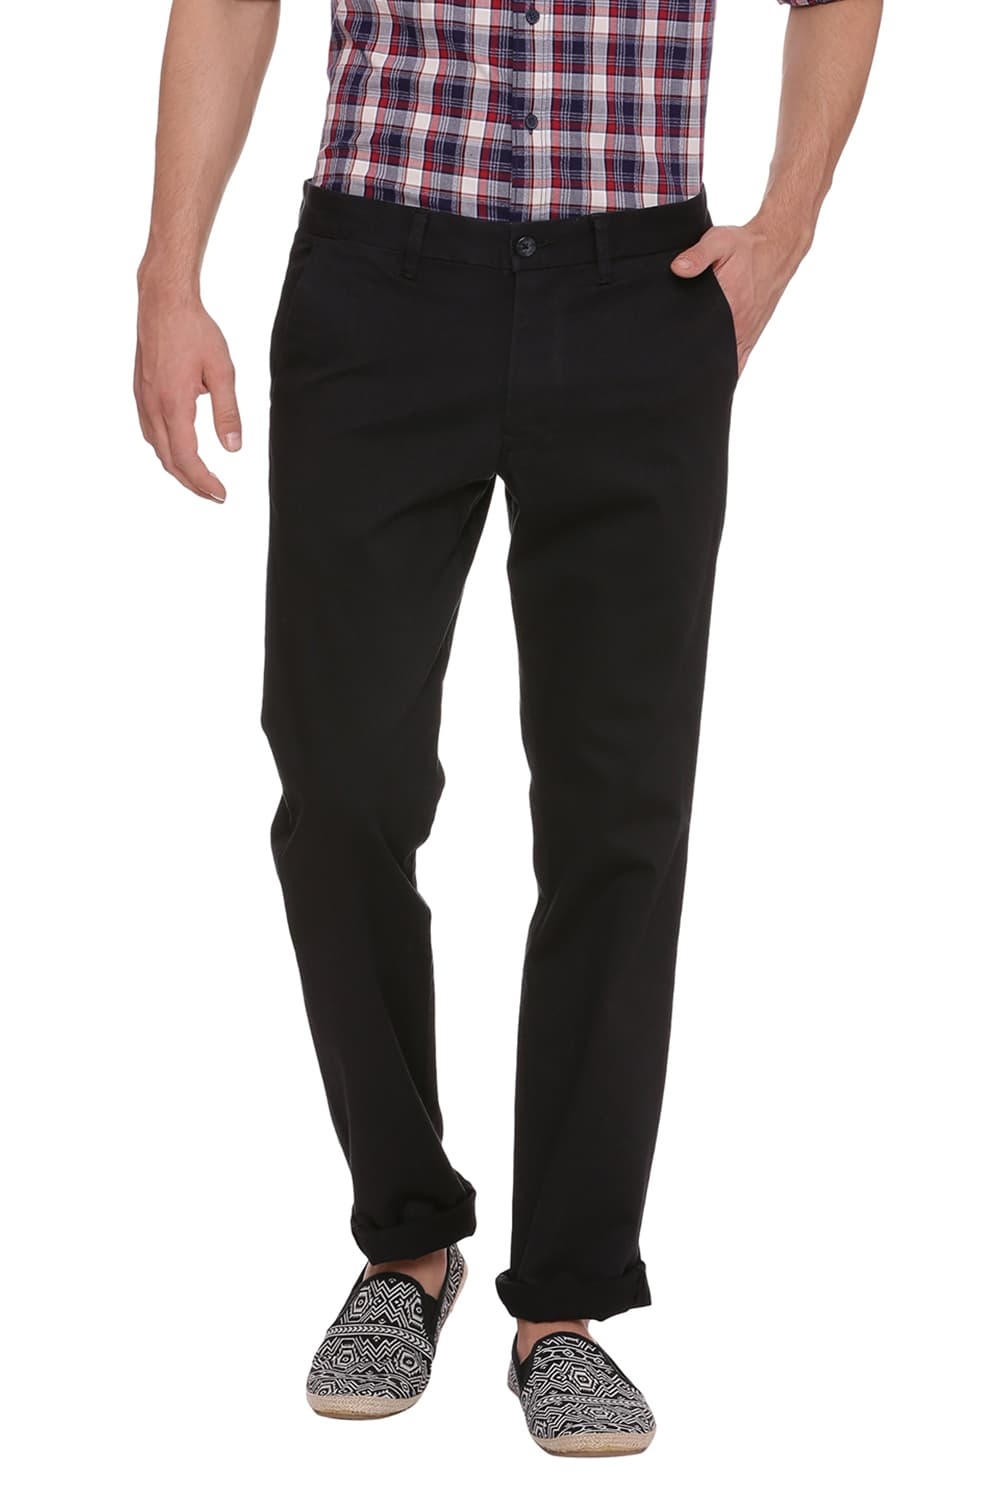 Basics | Basics Skinny Fit Jet Black Stretch Trouser